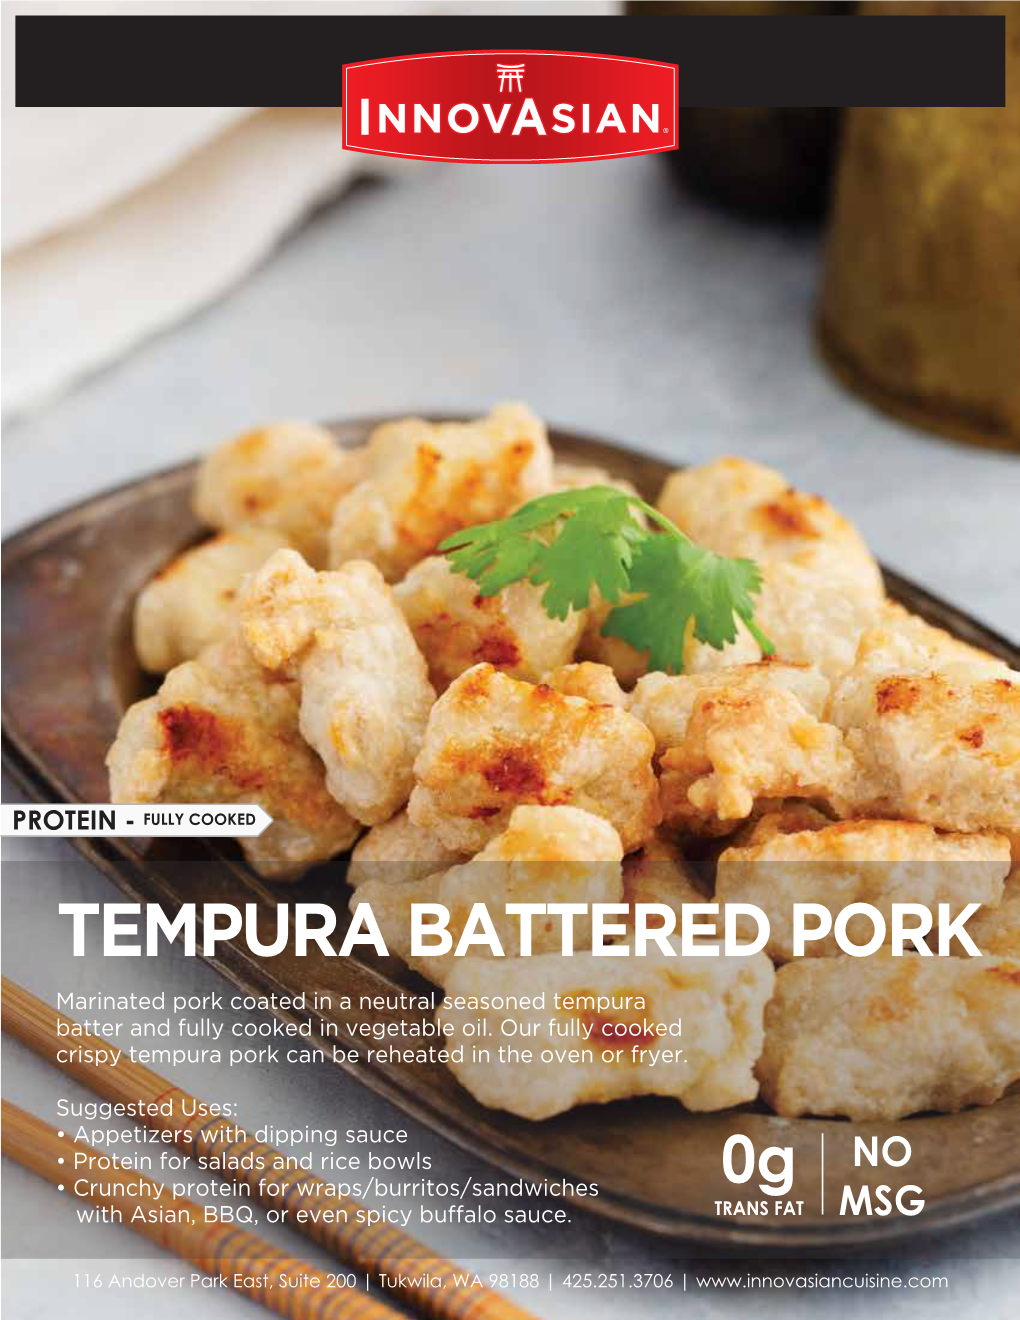 TEMPURA BATTERED PORK Marinated Pork Coated in a Neutral Seasoned Tempura Batter and Fully Cooked in Vegetable Oil